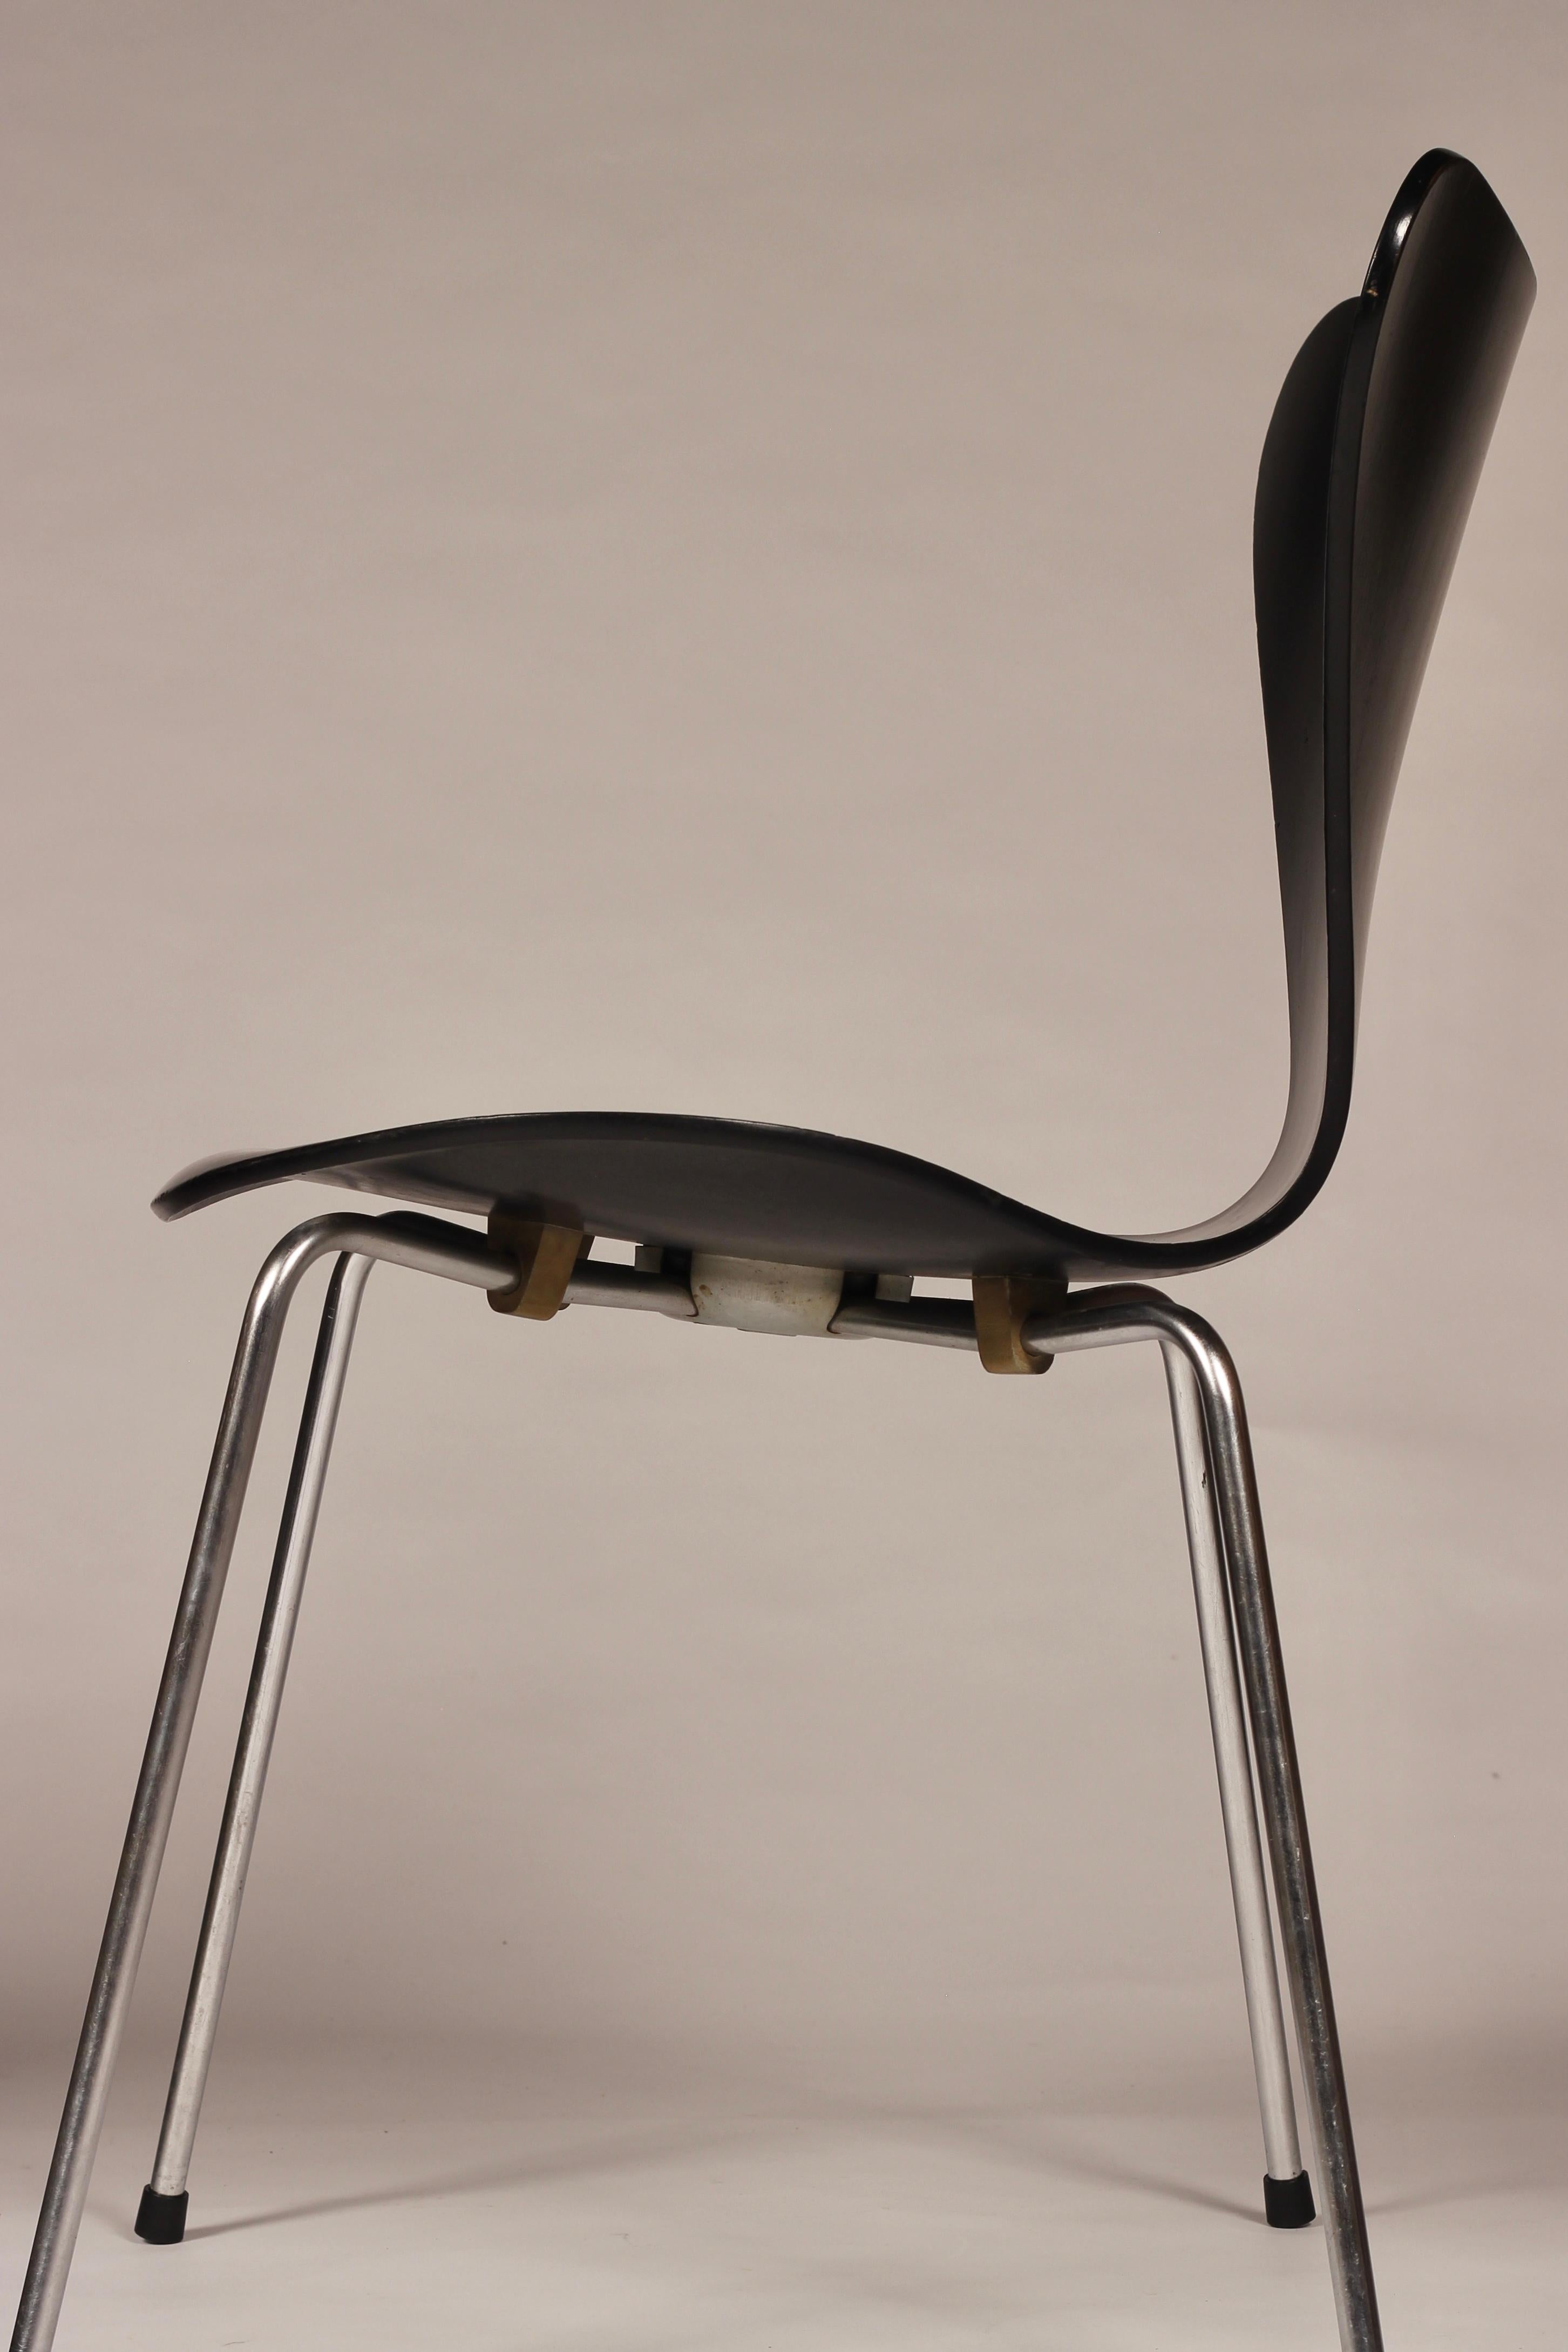 Danish Arne Jacobsen Series 7 or 3107 Chairs by Fritz Hansen Mid Century Modern 1964 For Sale